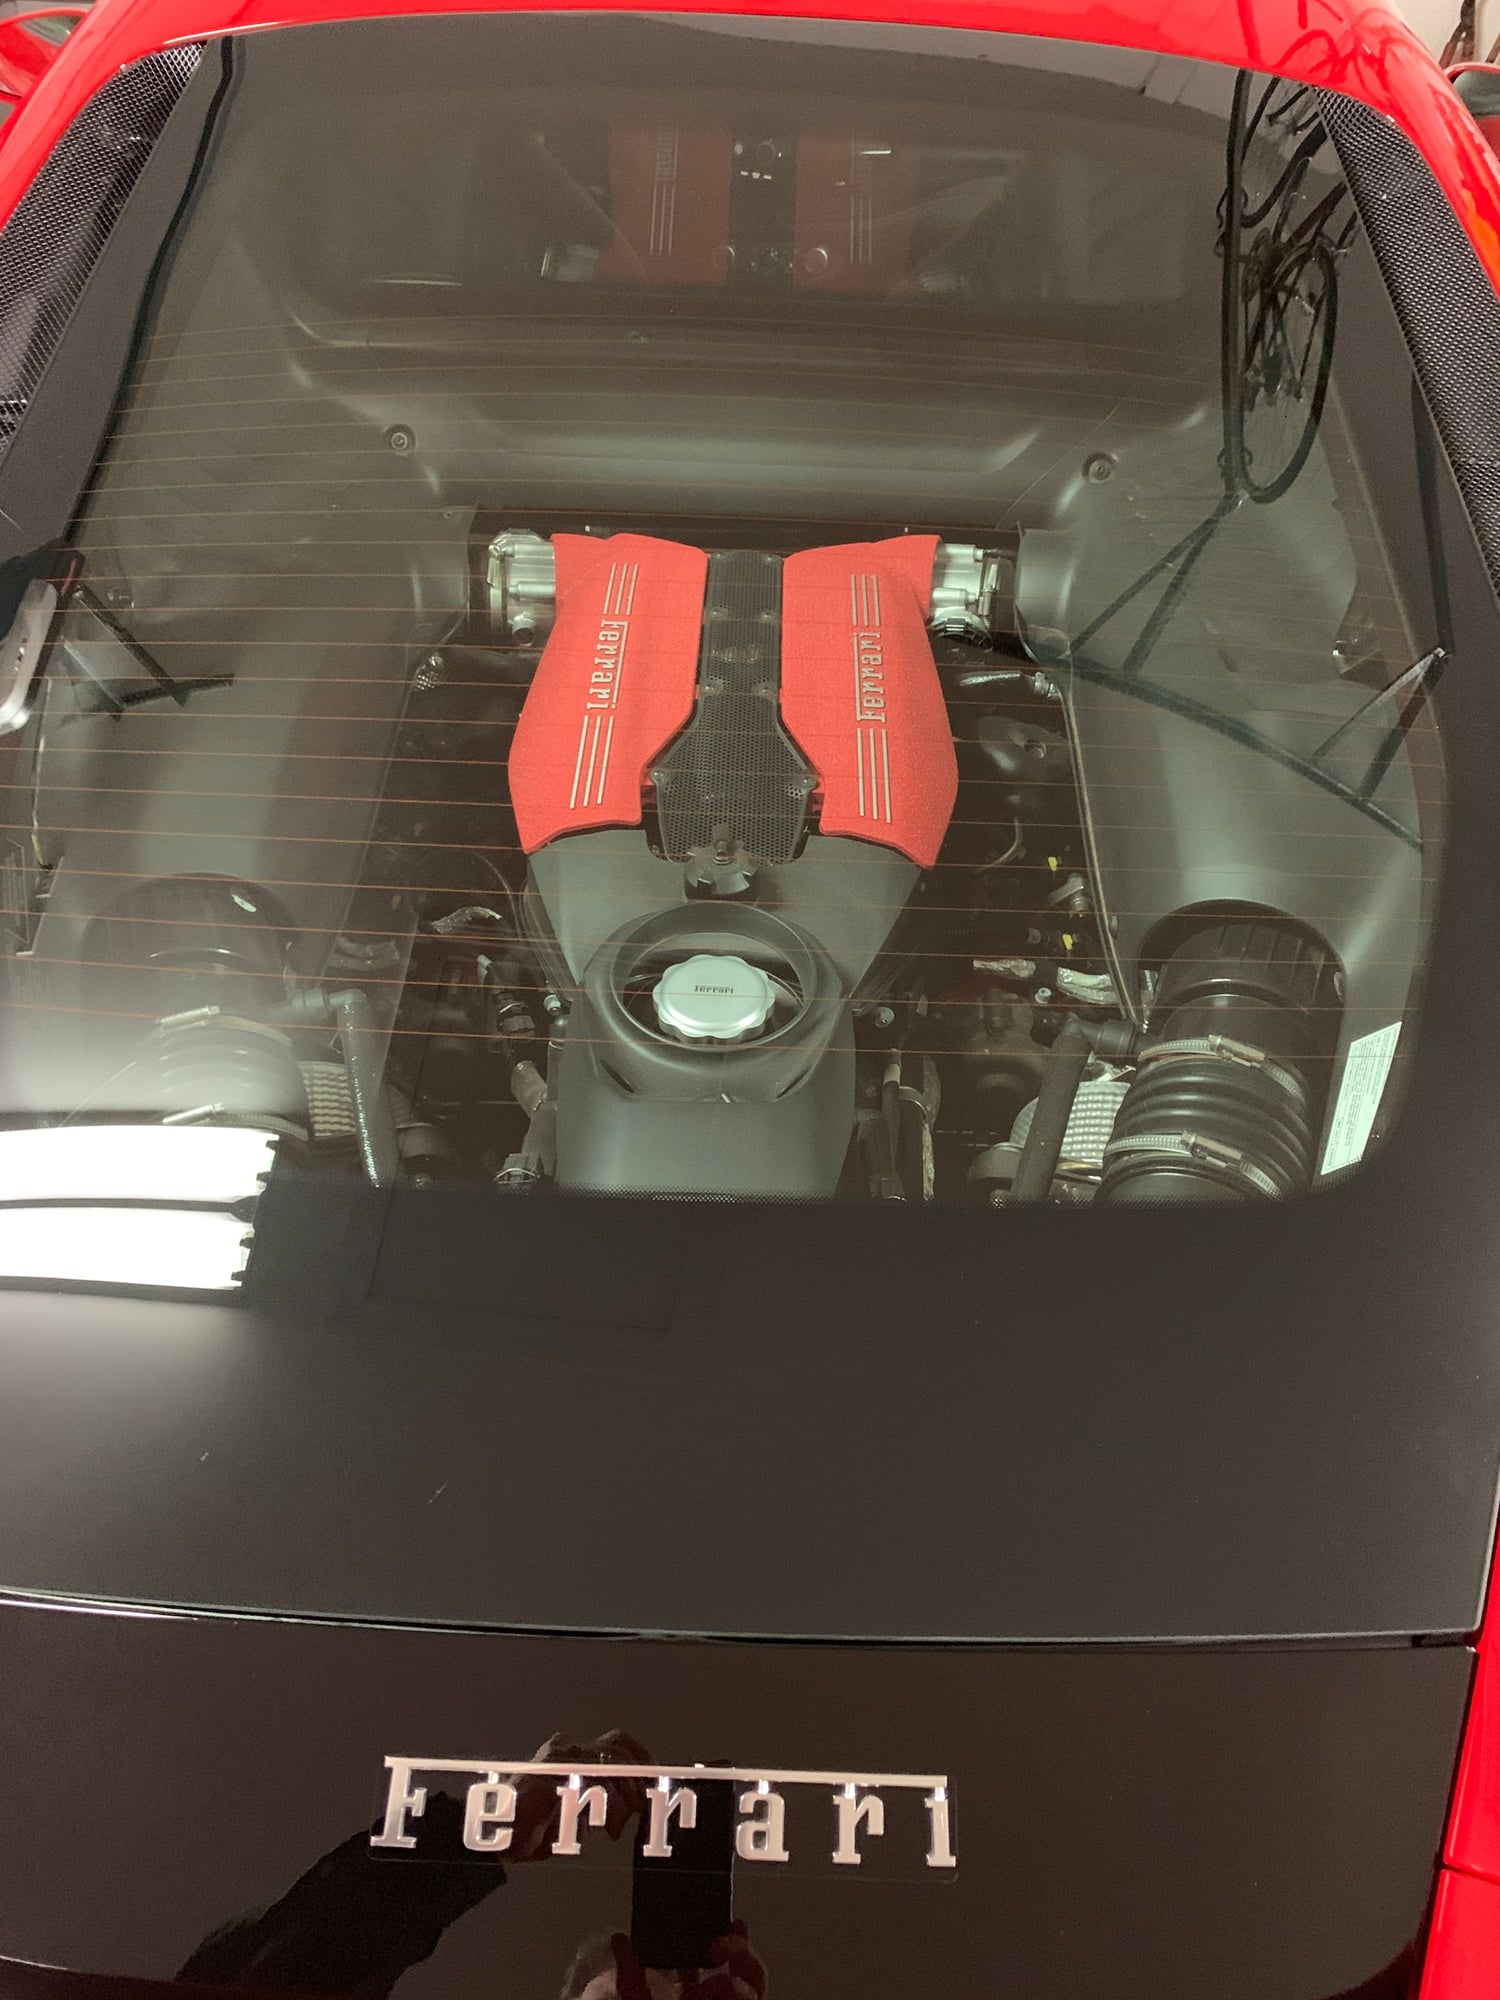 2017 Ferrari 488 GTB - 2017 Ferrari 488 GTB "One-Of-a-Kind" Bonus Car - Used - VIN ZFF79ALA3H0227176 - 4,640 Miles - 8 cyl - 2WD - Automatic - Coupe - Red - Shreveport, LA 71106, United States